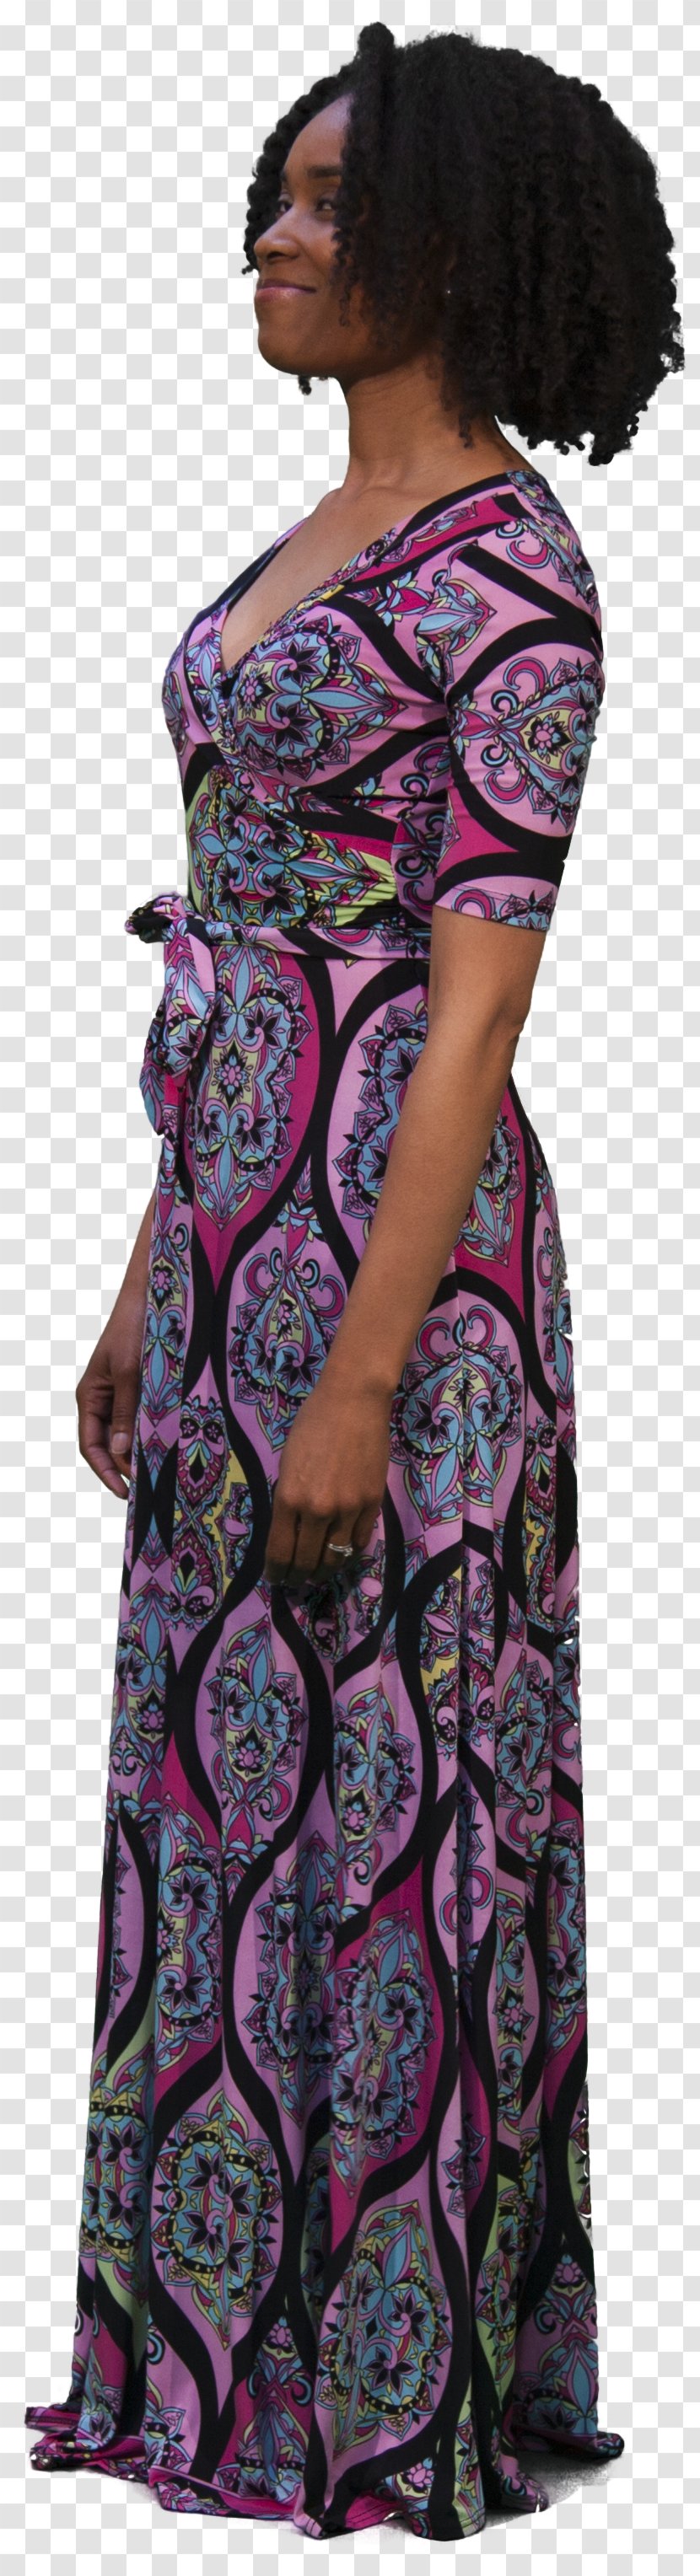 Paisley Shoulder Dress Costume - Clothing Transparent PNG